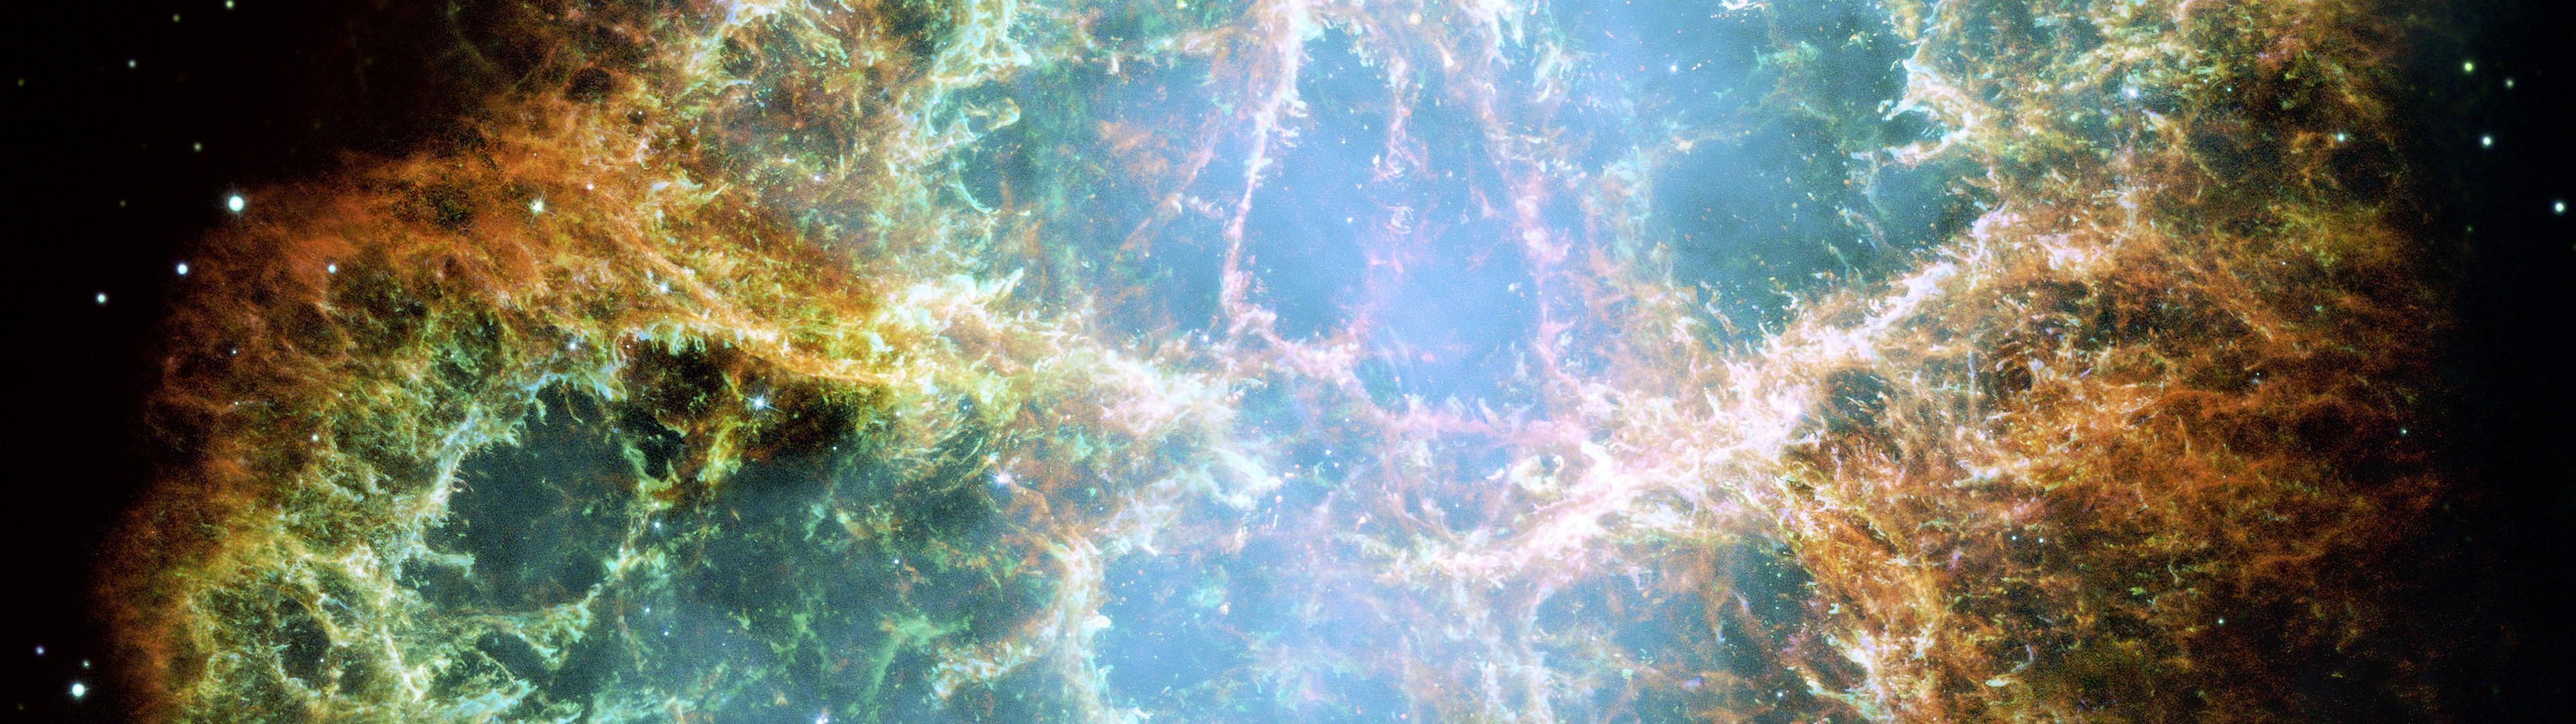 Multiple Display Stars Space Colorful Galaxy Universe Crab Nebula 3840x1080